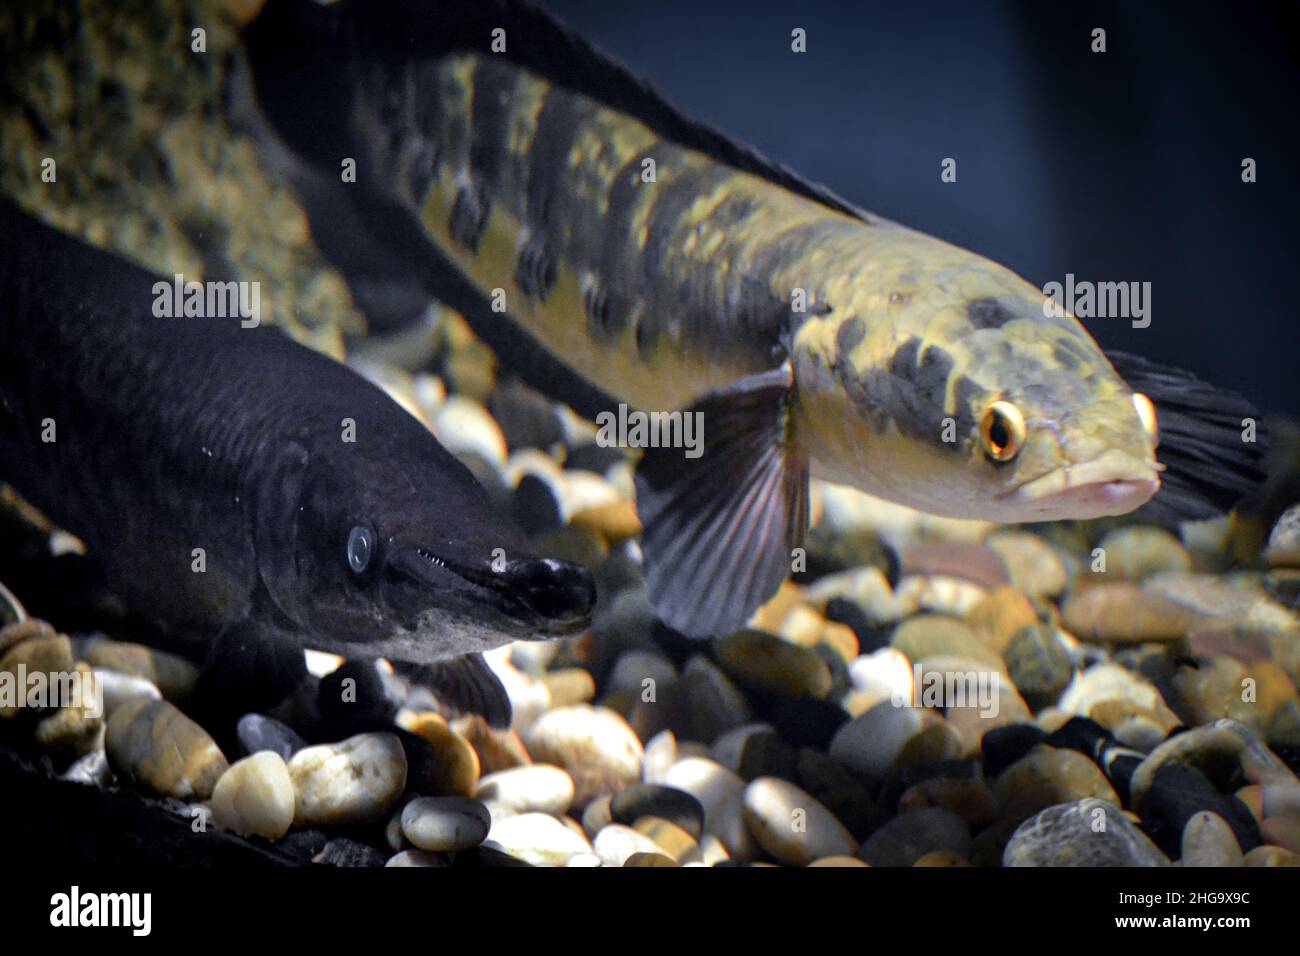 Channa argus fish Stock Photo